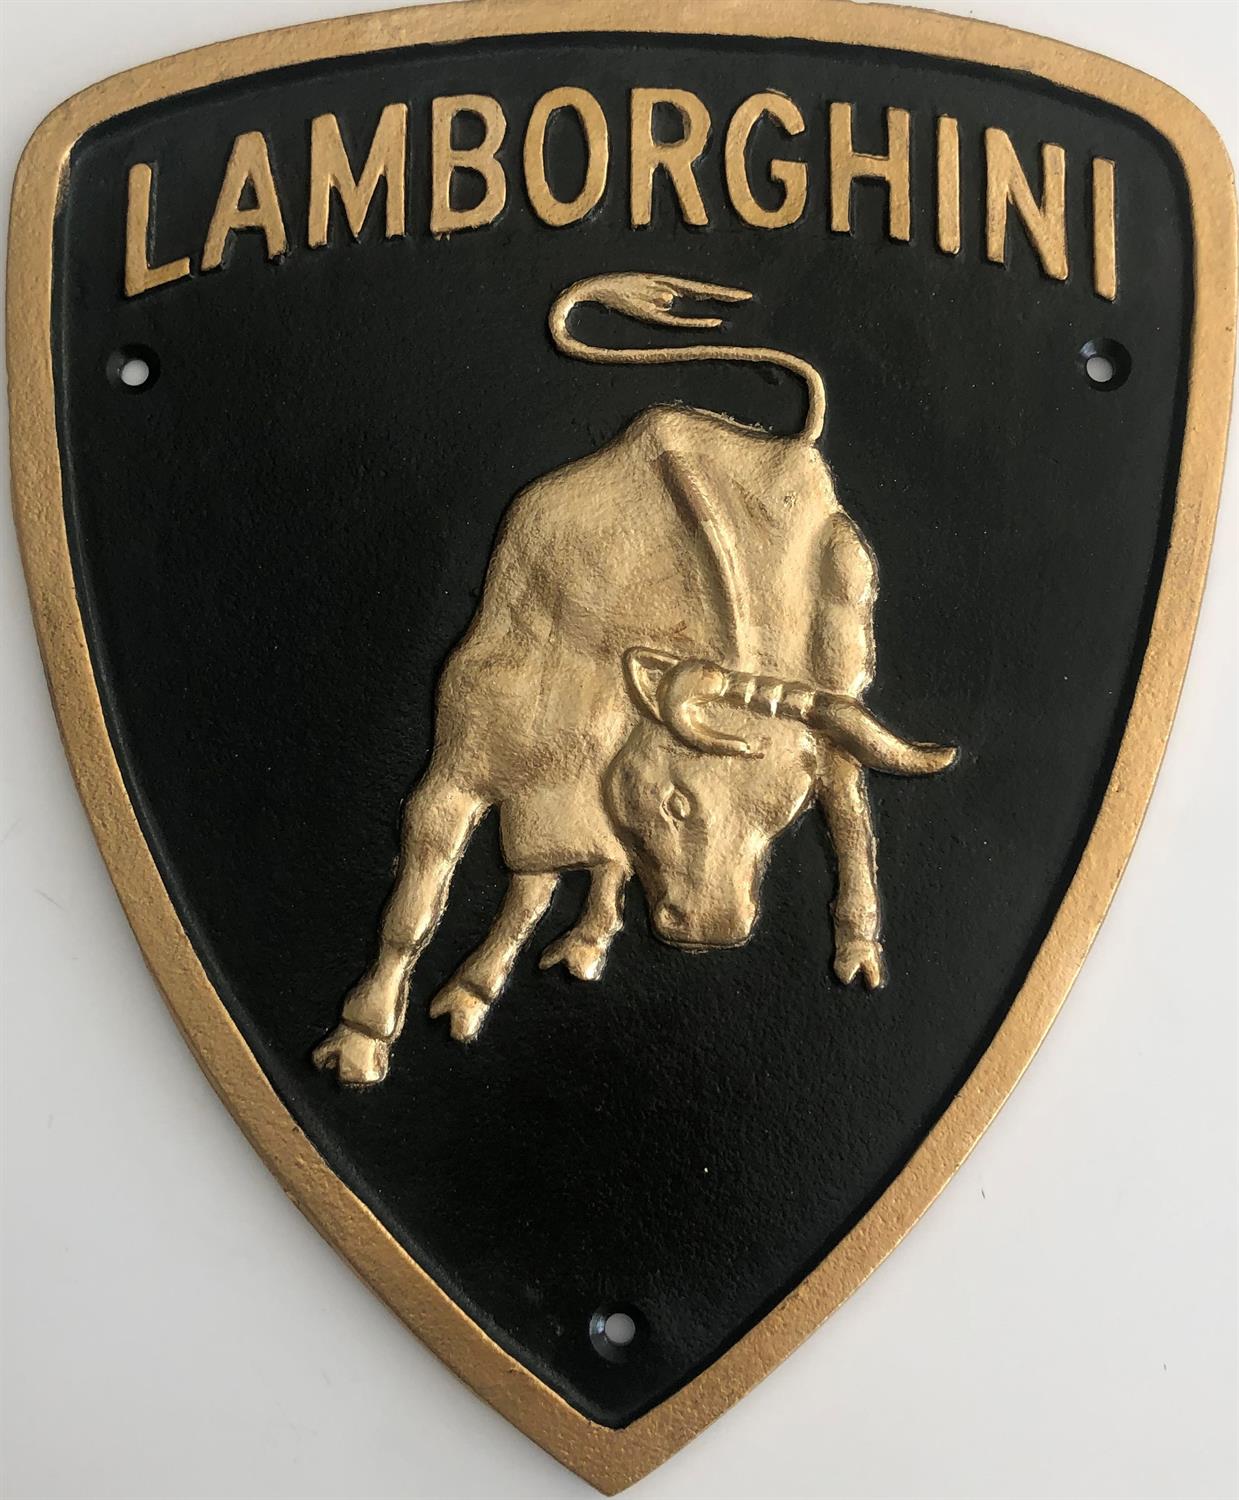 Lamborghini-Style Shield Wall Sign - Image 2 of 2